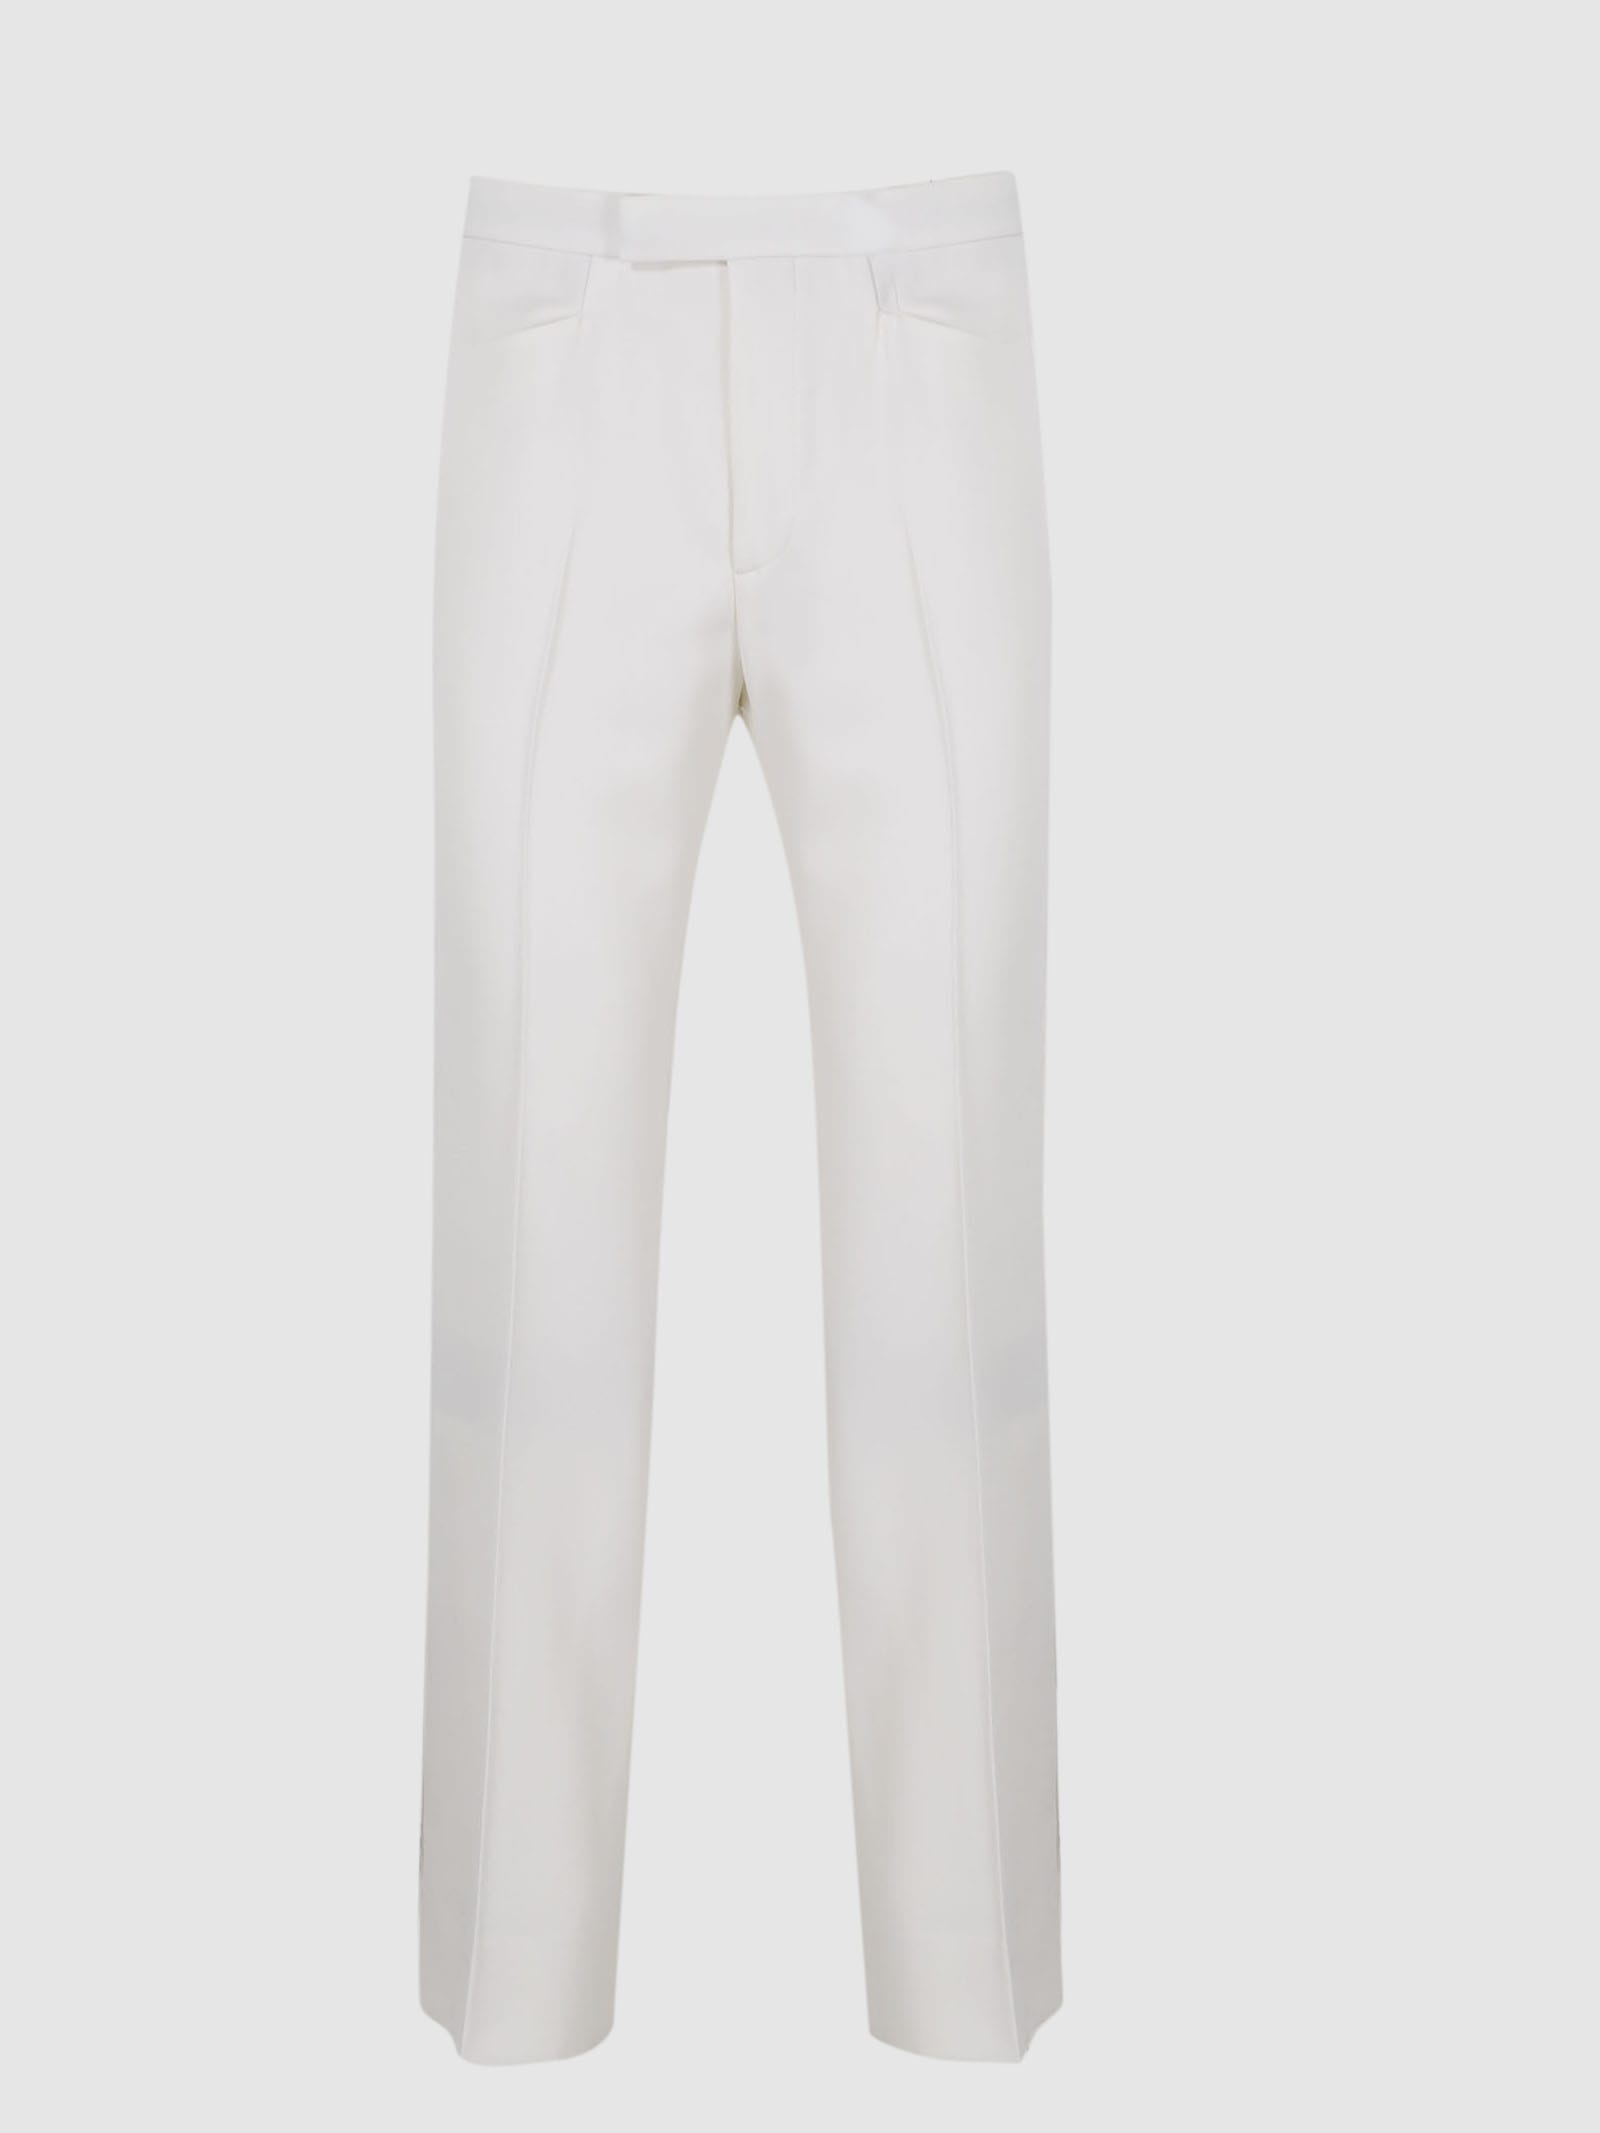 Gucci Satin Profiles Tailored Trousers